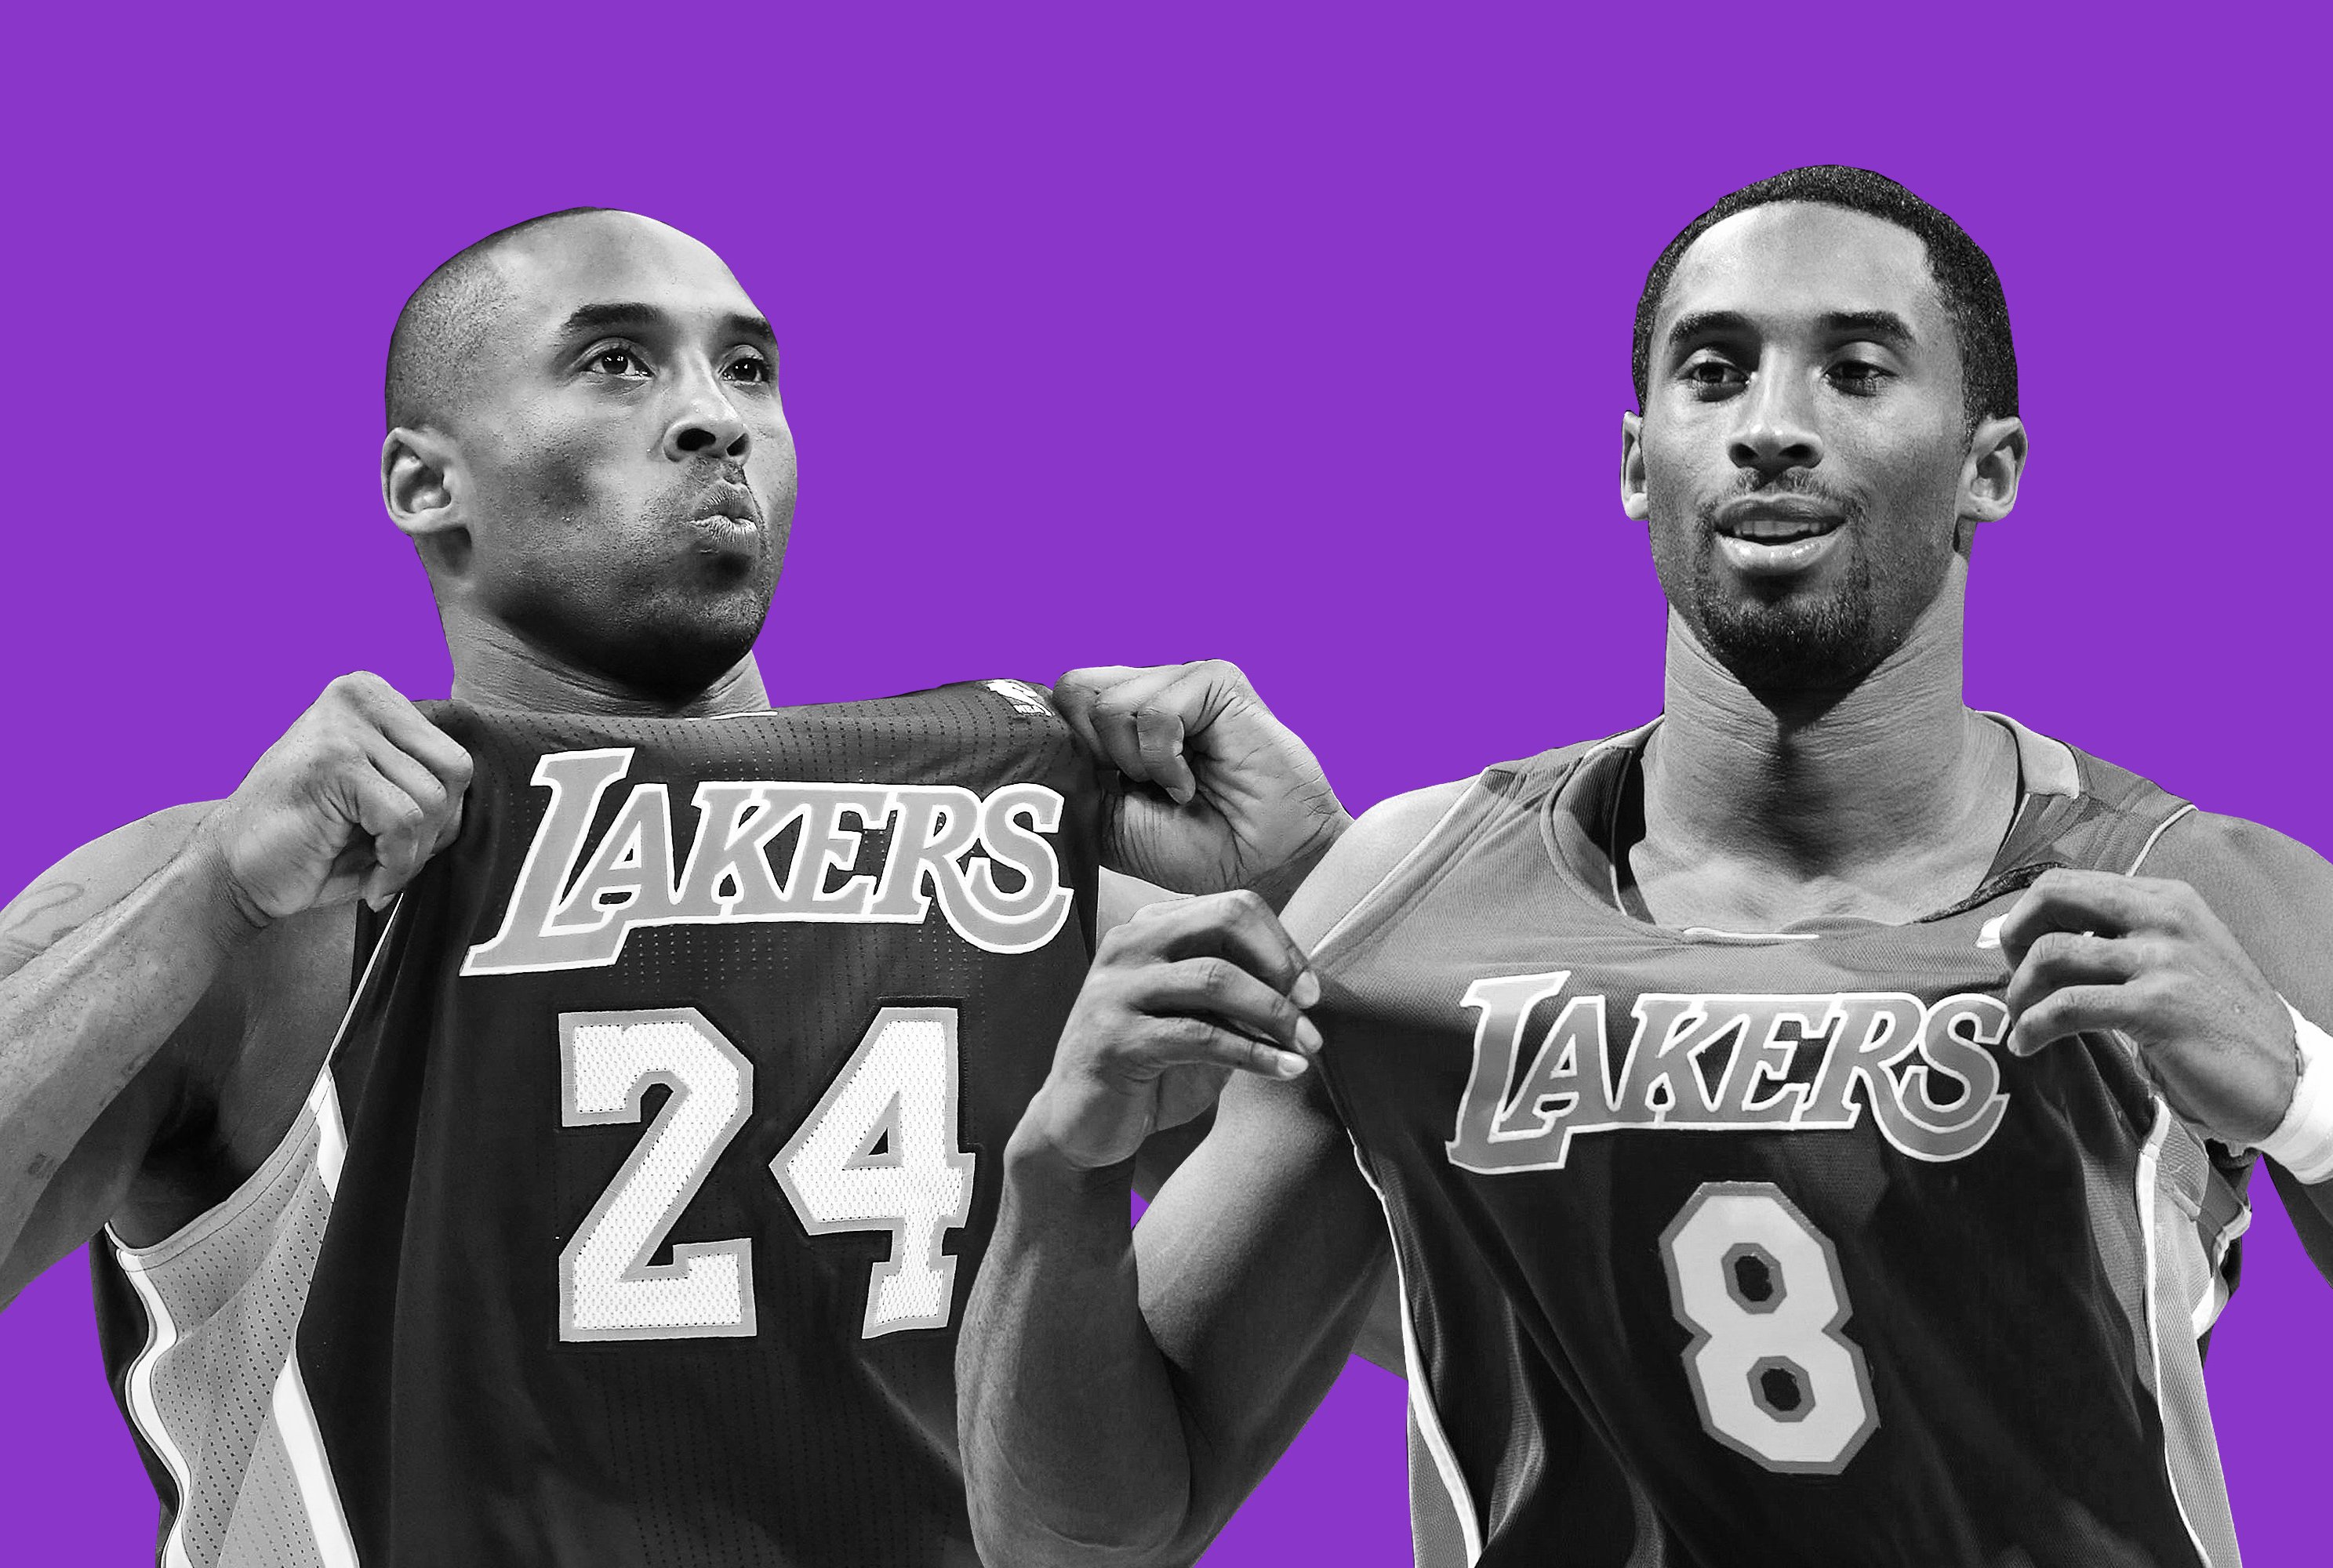 Compare The Pair – No. 8 Kobe Bryant vs No. 24 Kobe Bryant